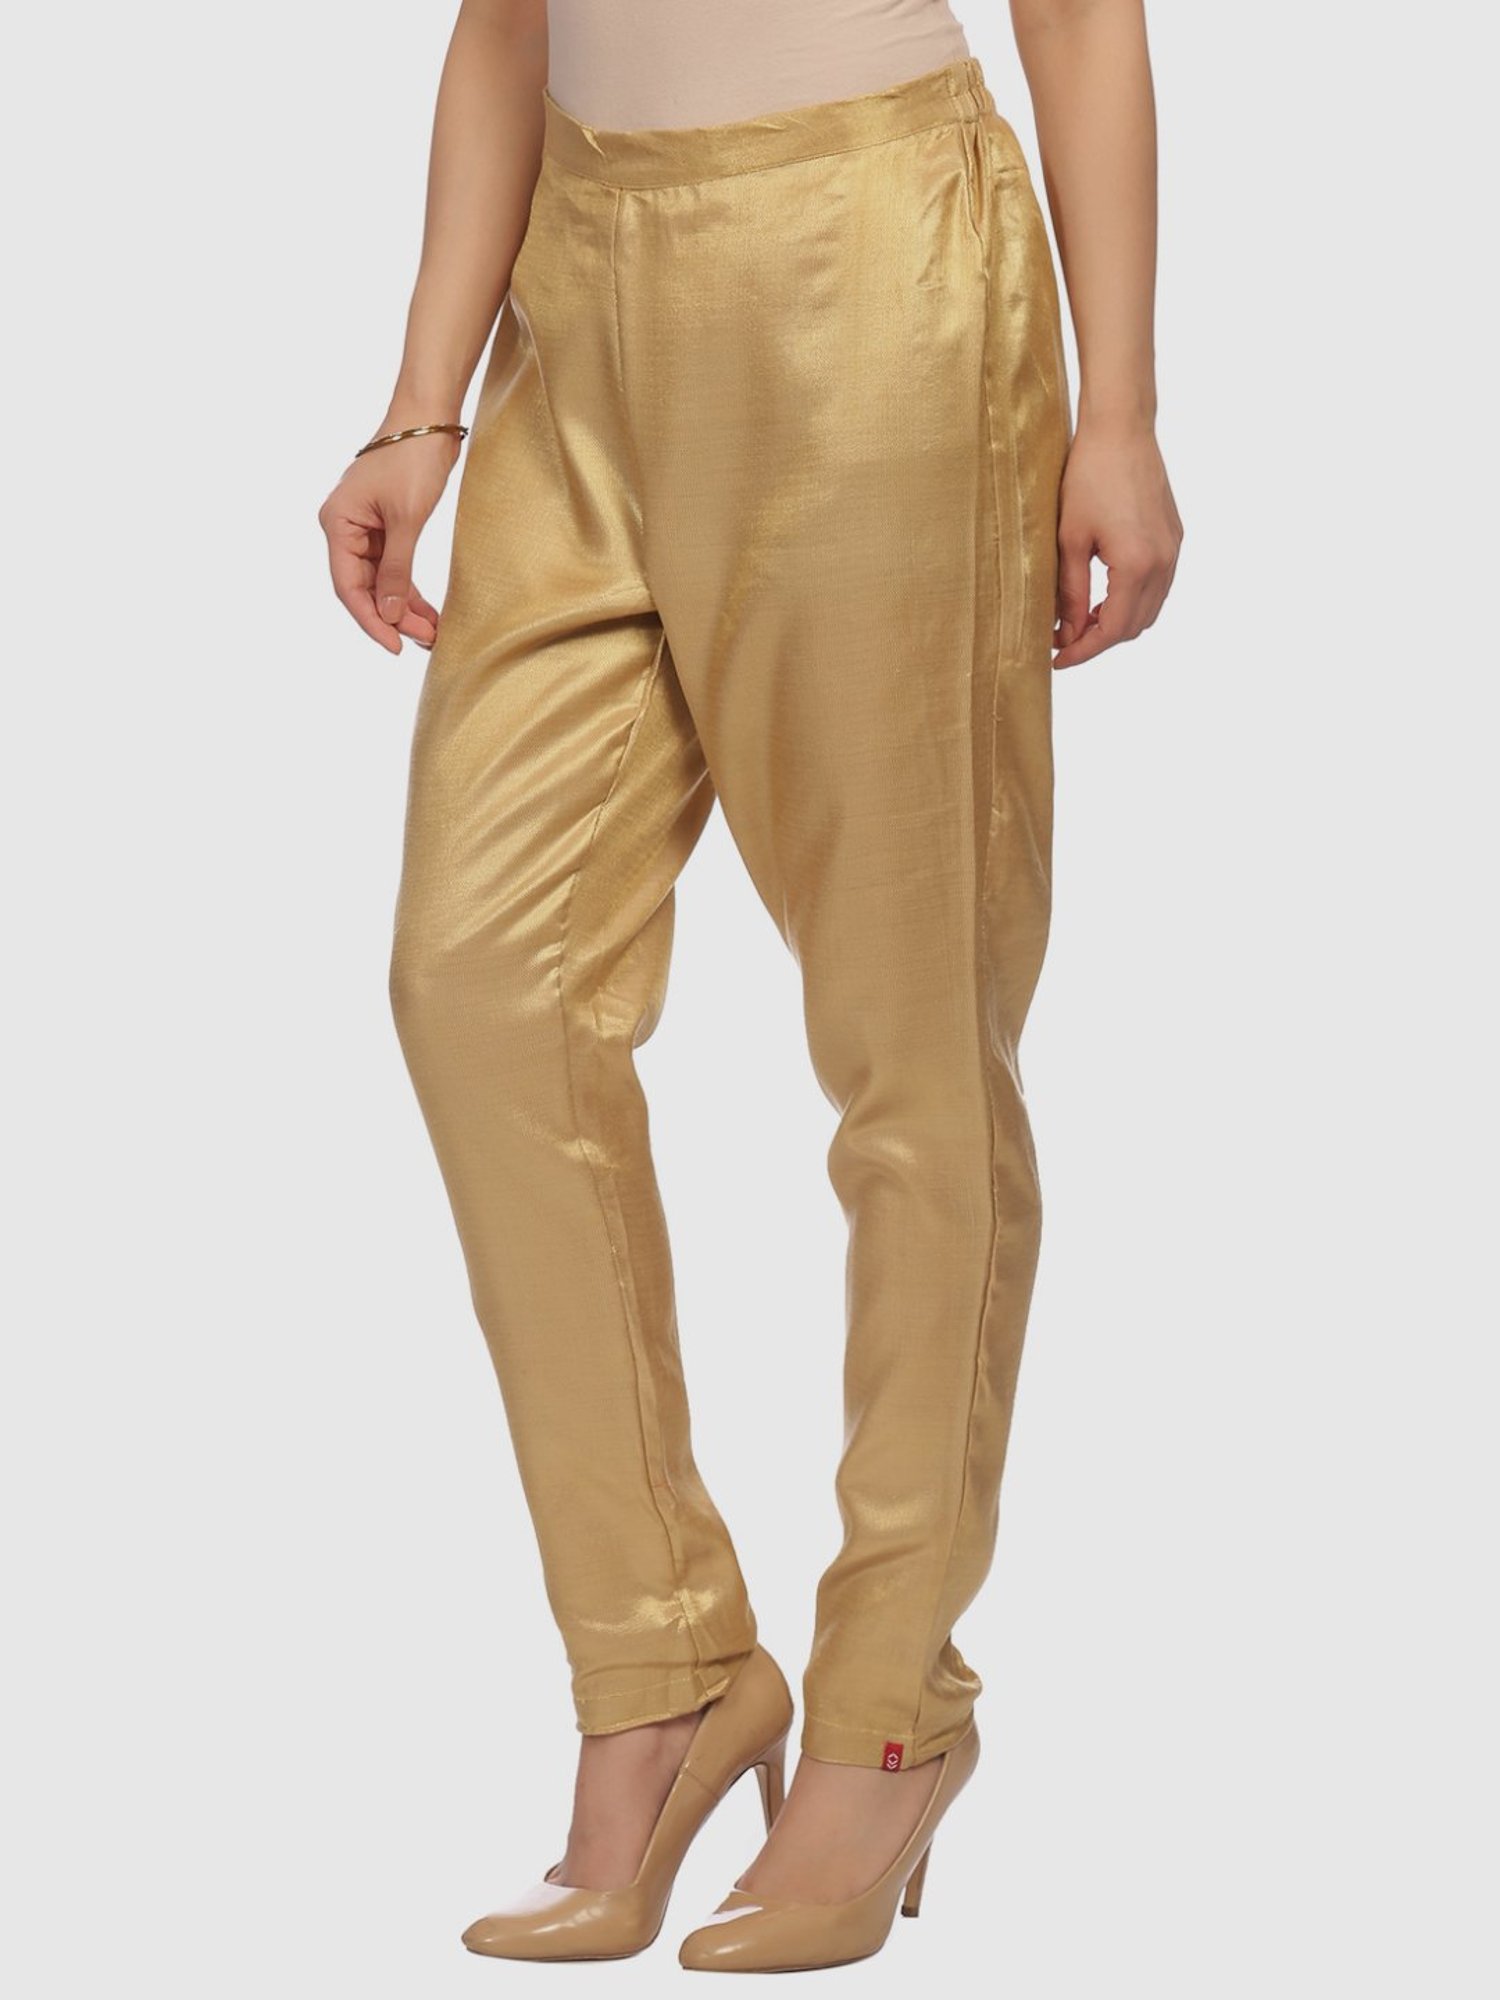 Buy Online Yellow Metallic Cotton Straight Suit Set for Women  Girls at  Best Prices in Biba India